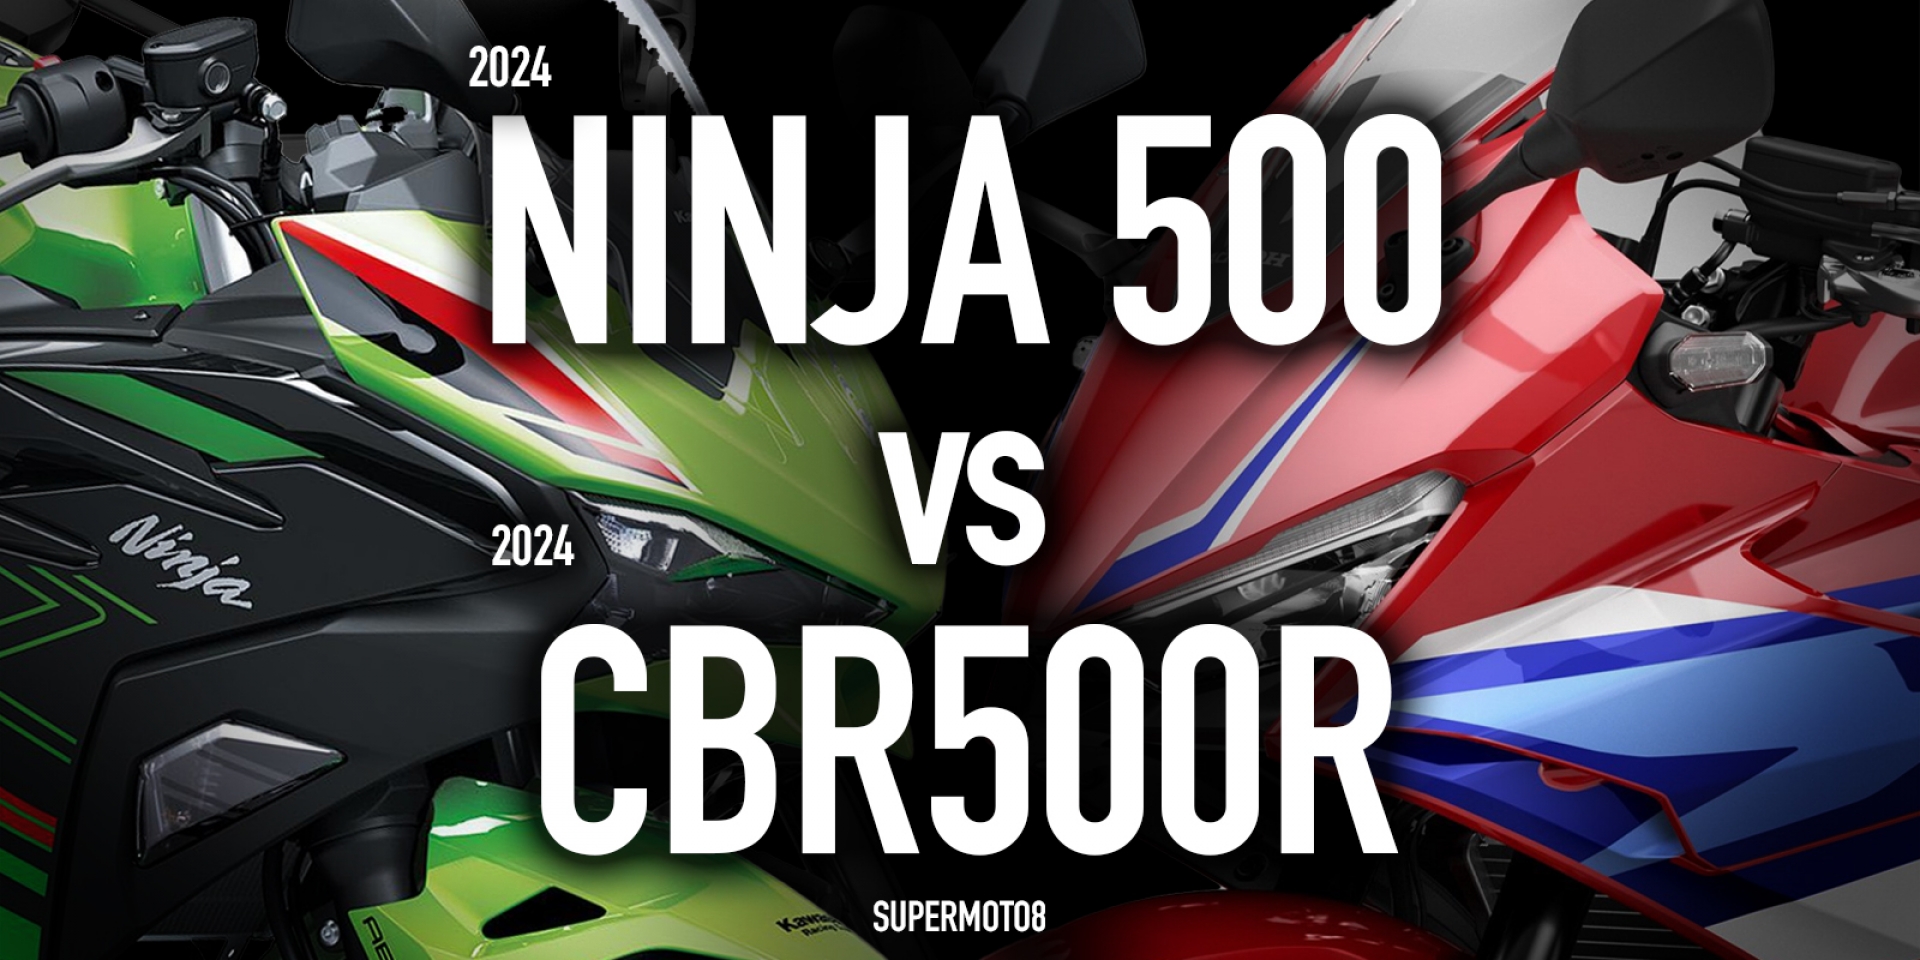 2024黃牌熱血街跑之爭。KAWASAKI Ninja 500 vs Honda CBR500R 紙上PK !